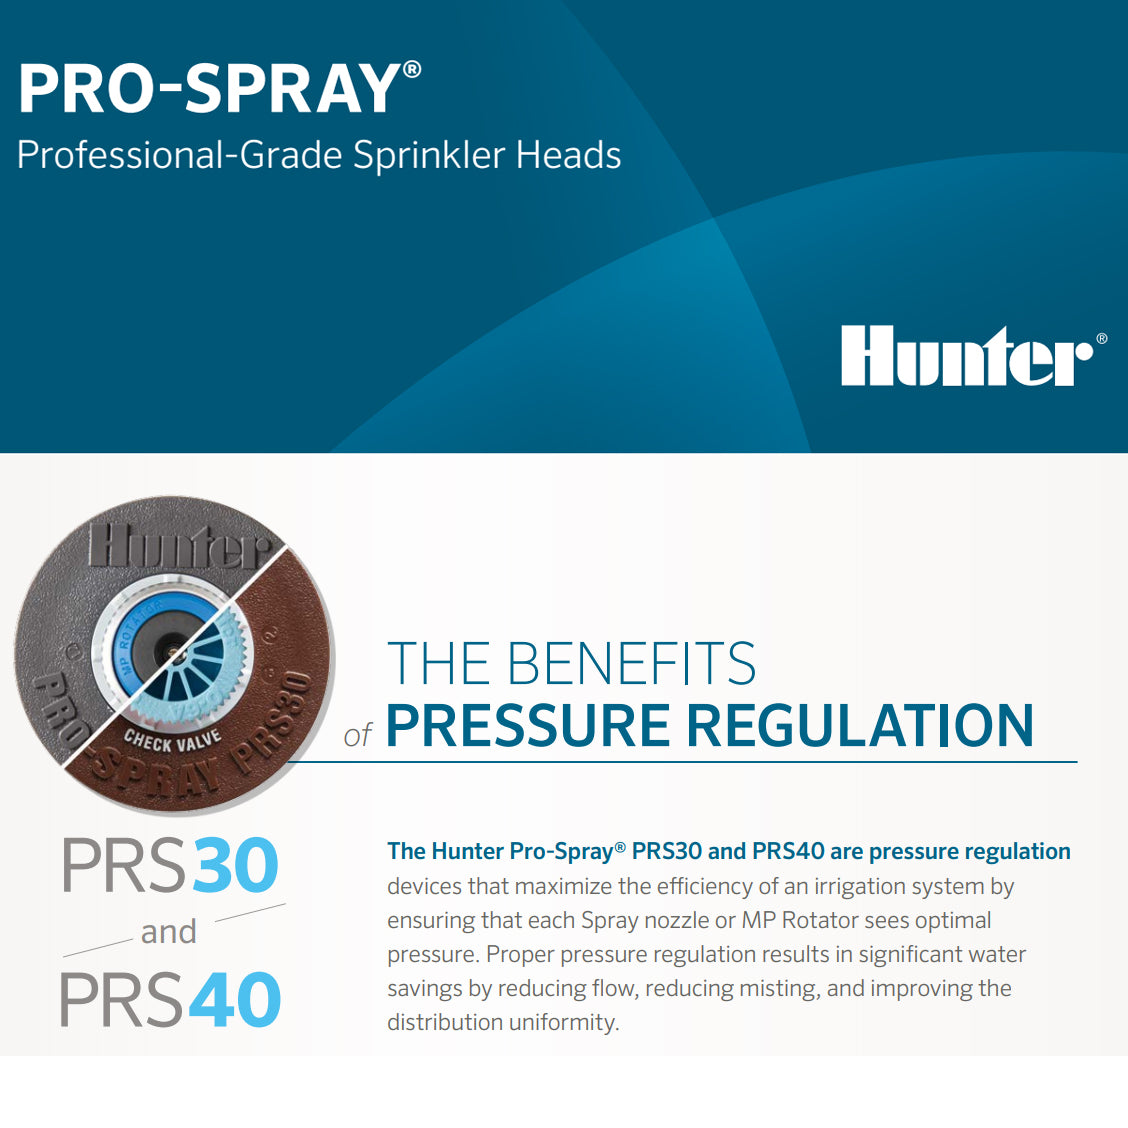 PROS-04-PRS40-CV - 4" Pop-up Pro Spray Professional Grade Sprinkler Head